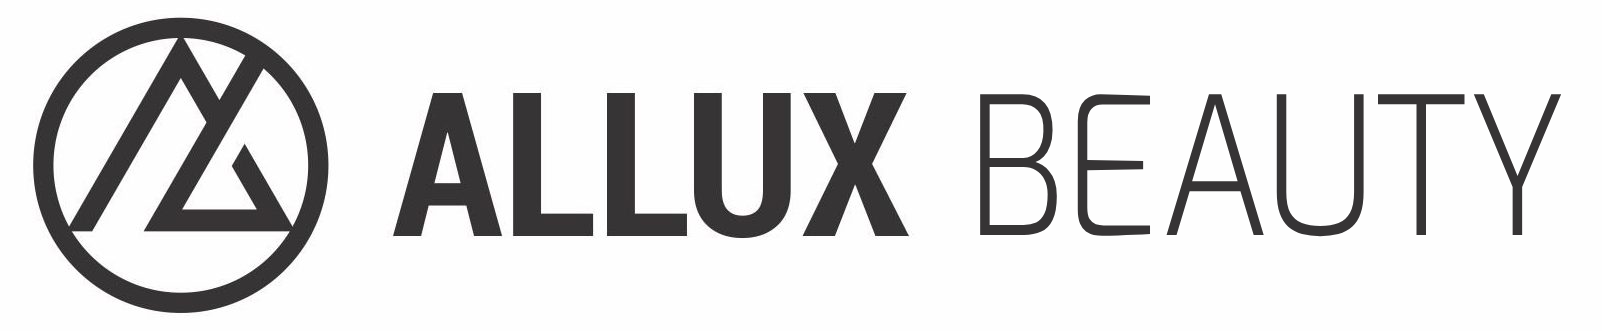 Allux Beauty – Allux.com.vn